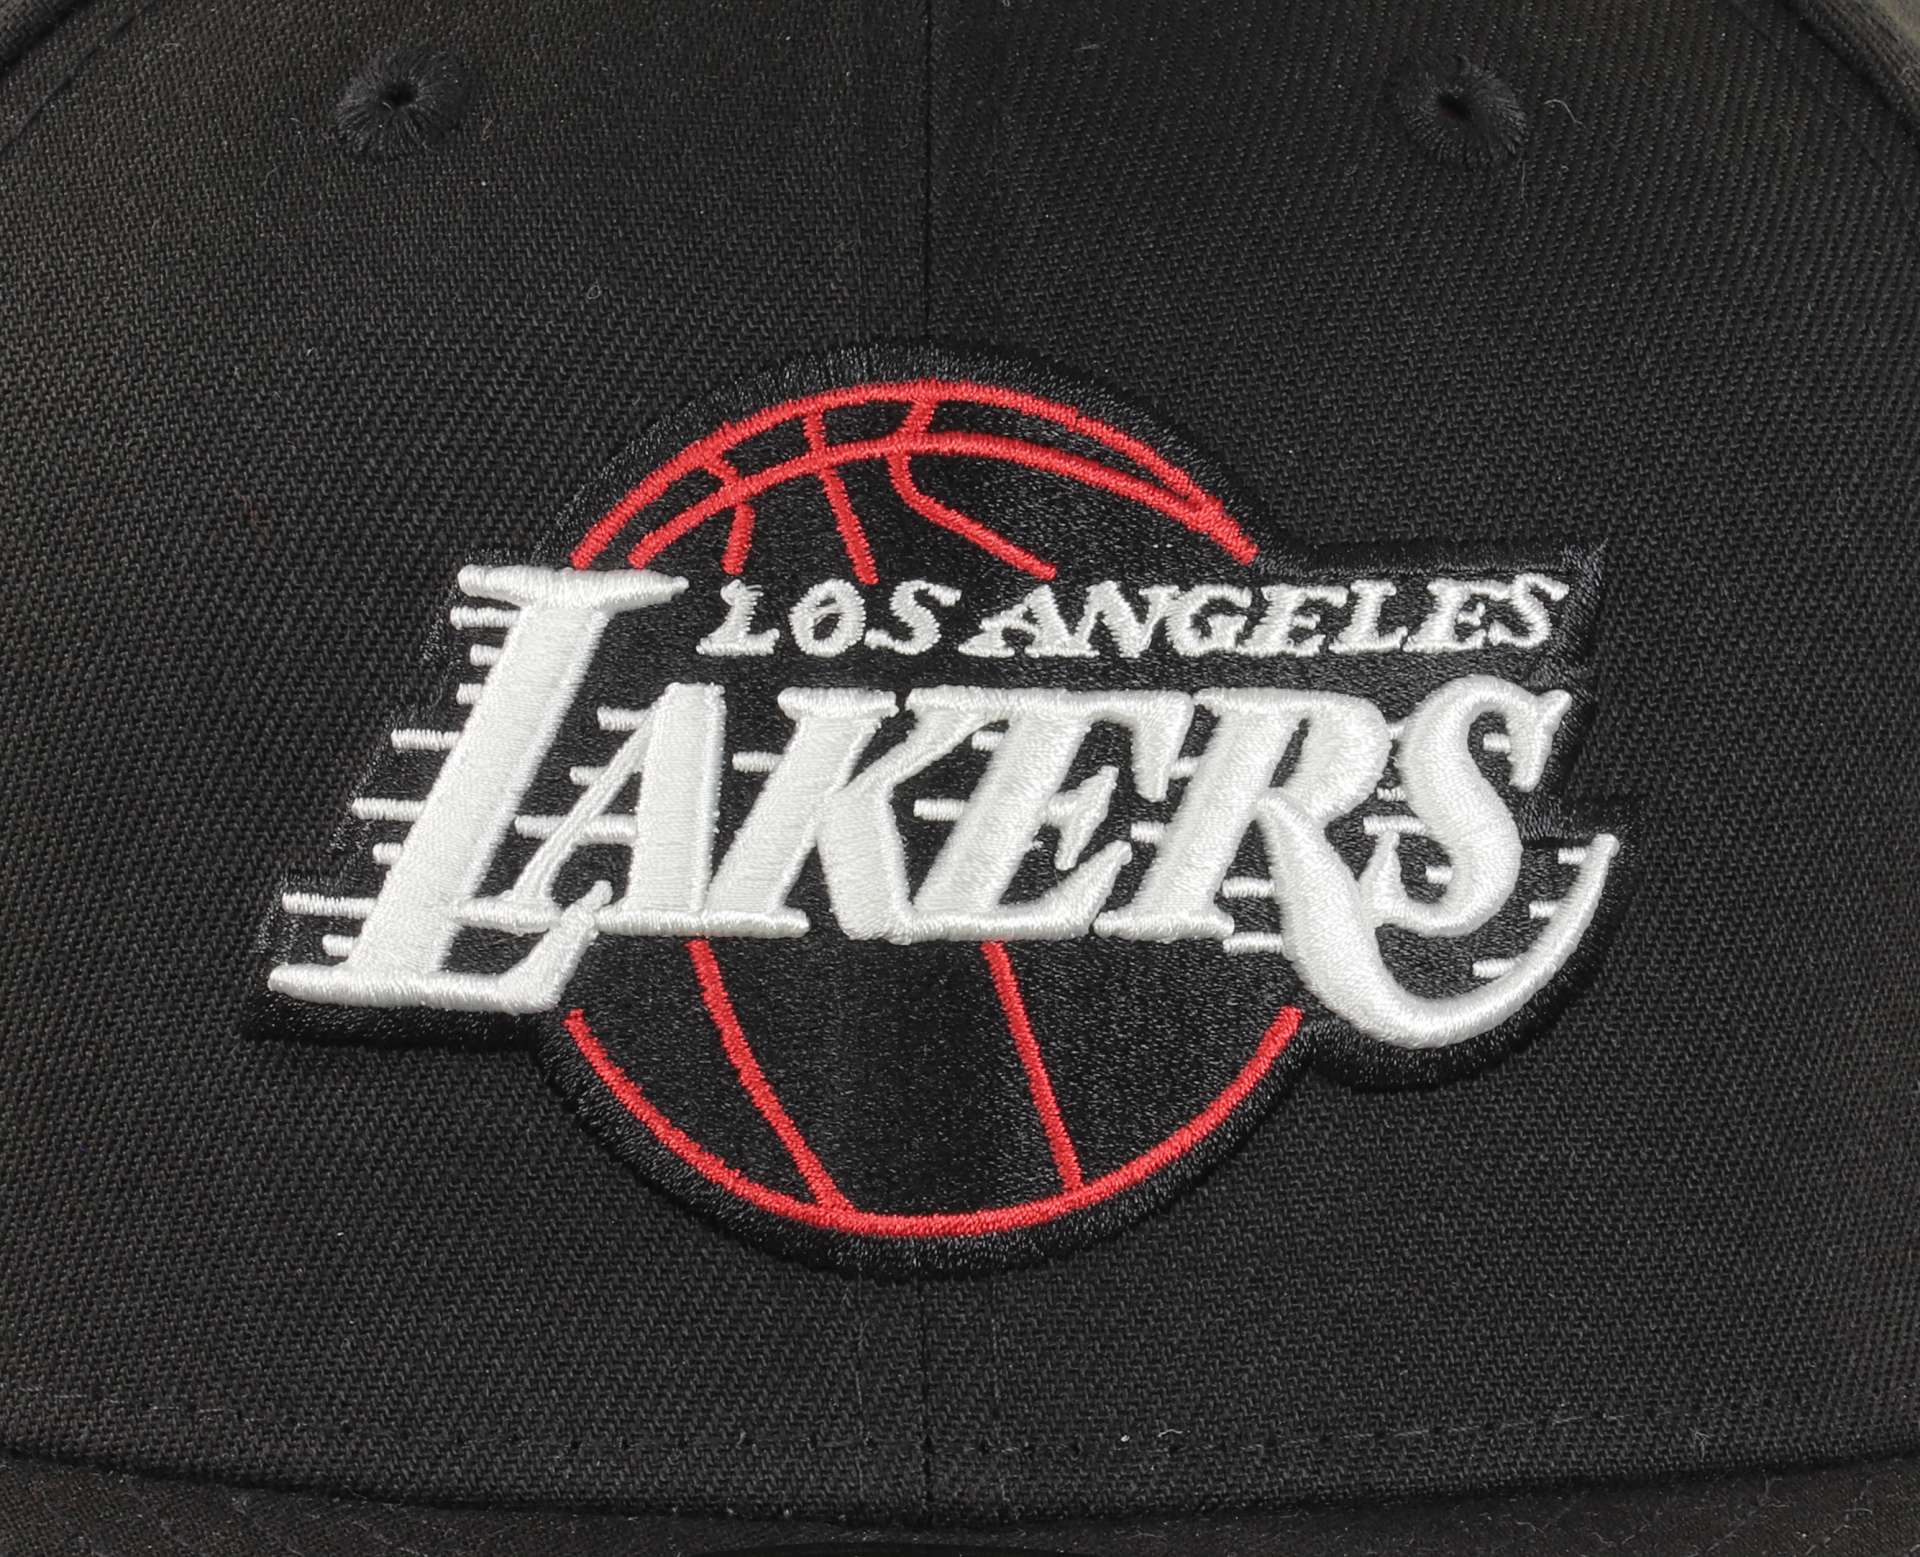 Los Angeles Lakers NBA Black Red 59Fifty Basecap New Era